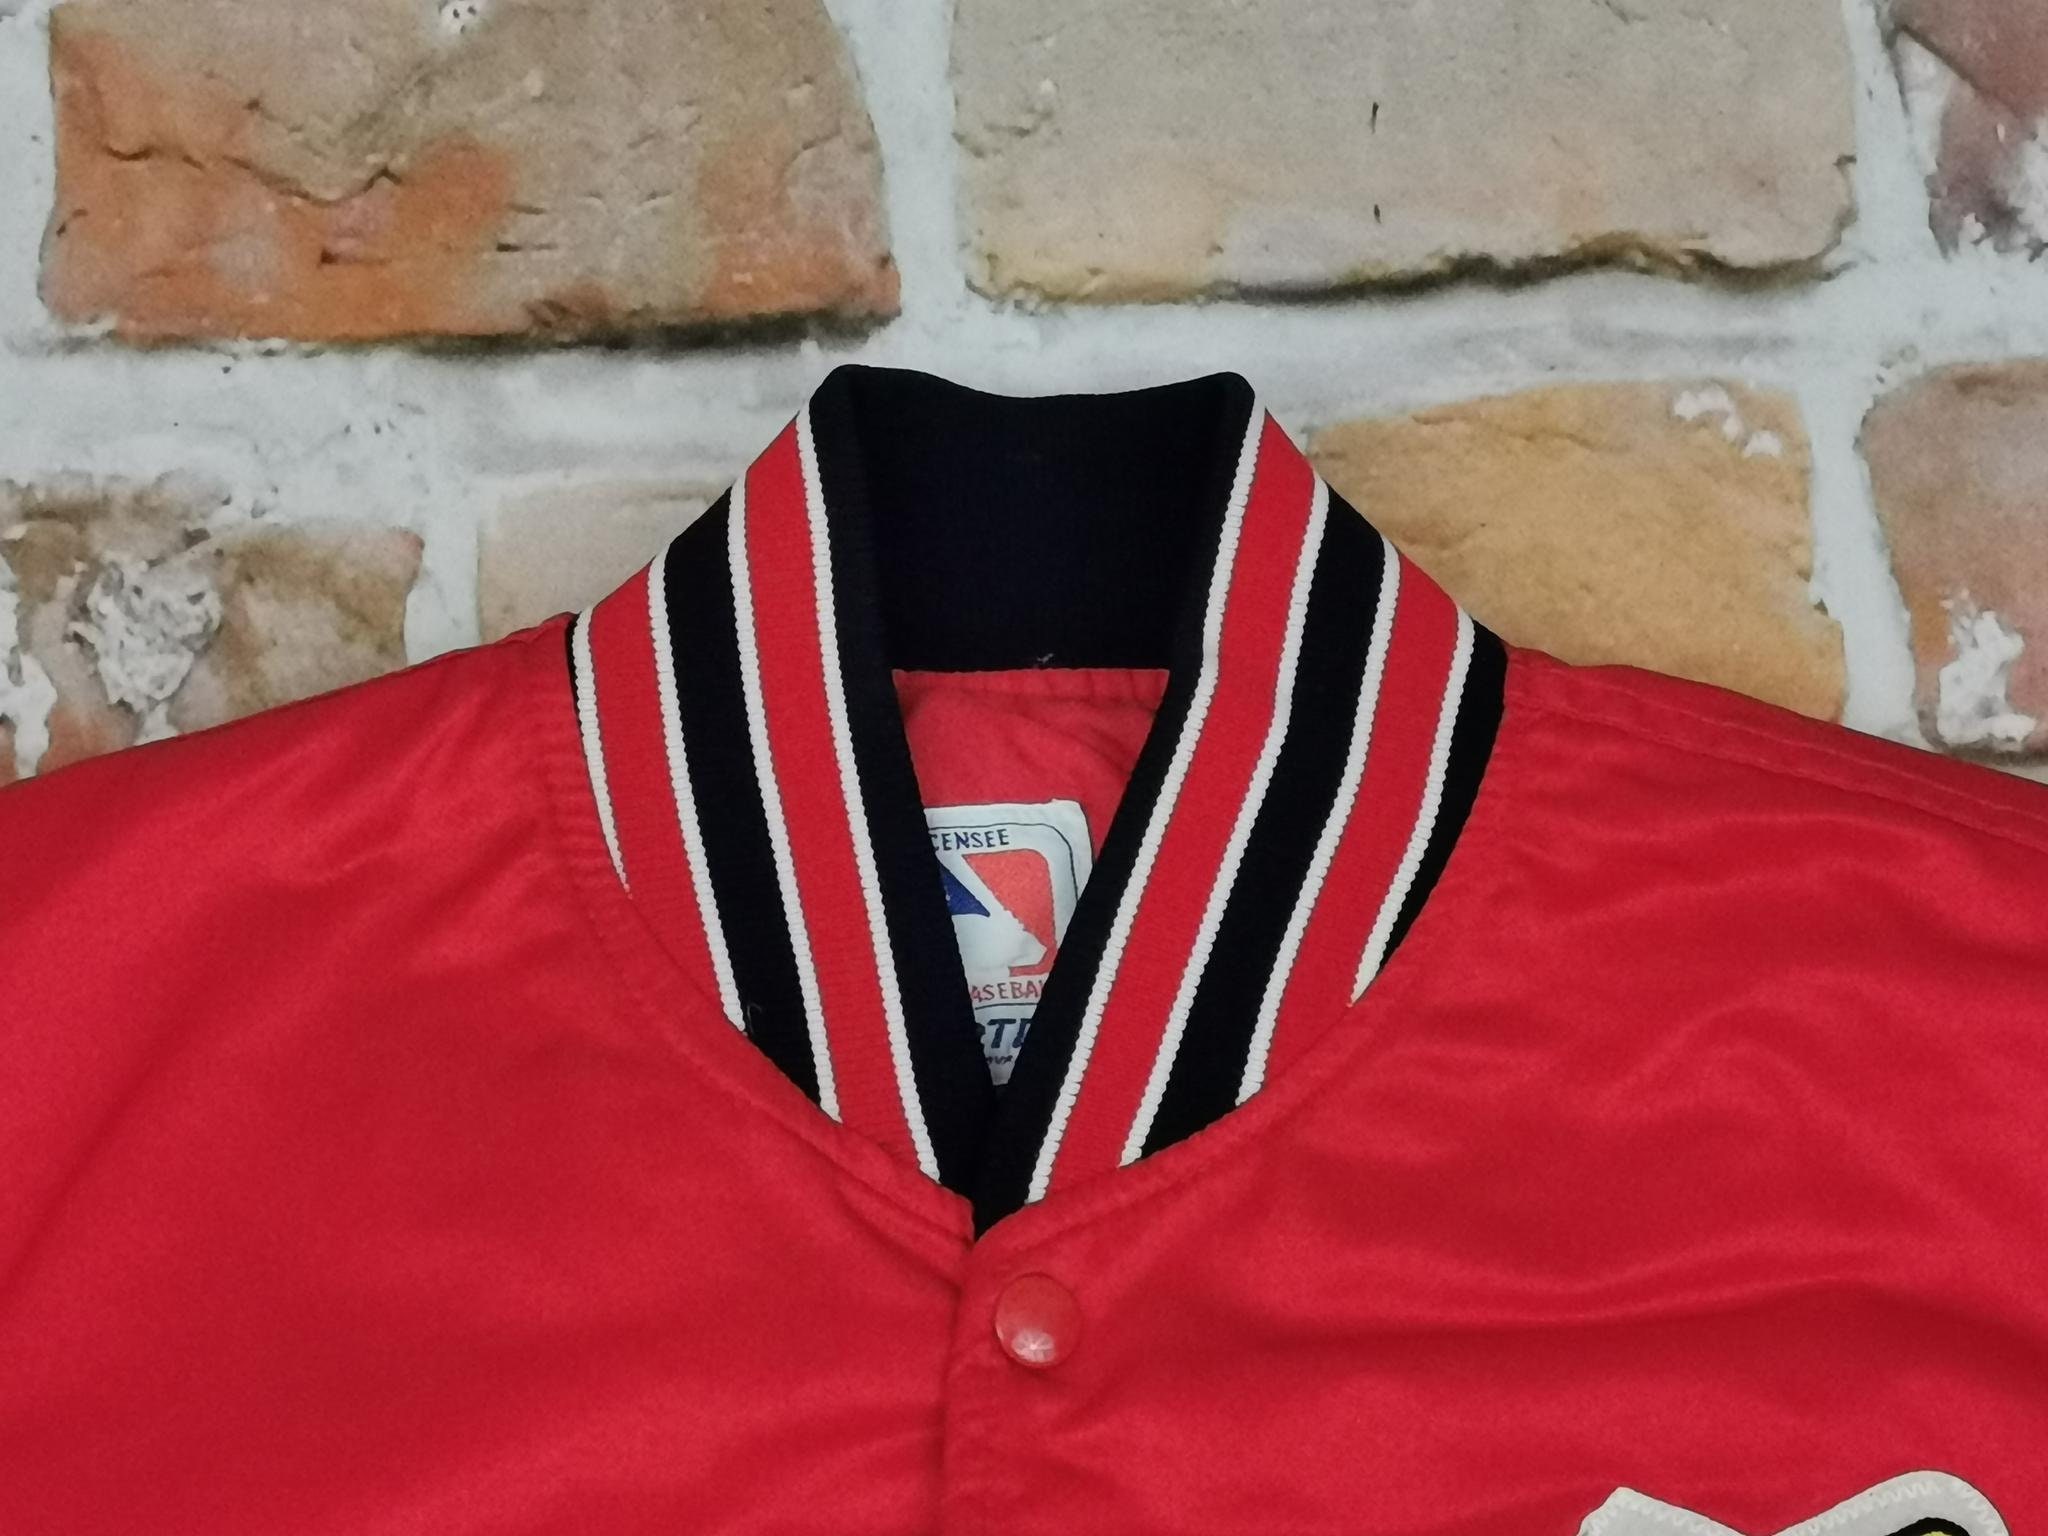 Jacket Makers St. Louis Cardinals The Ace Starter Blue Jacket